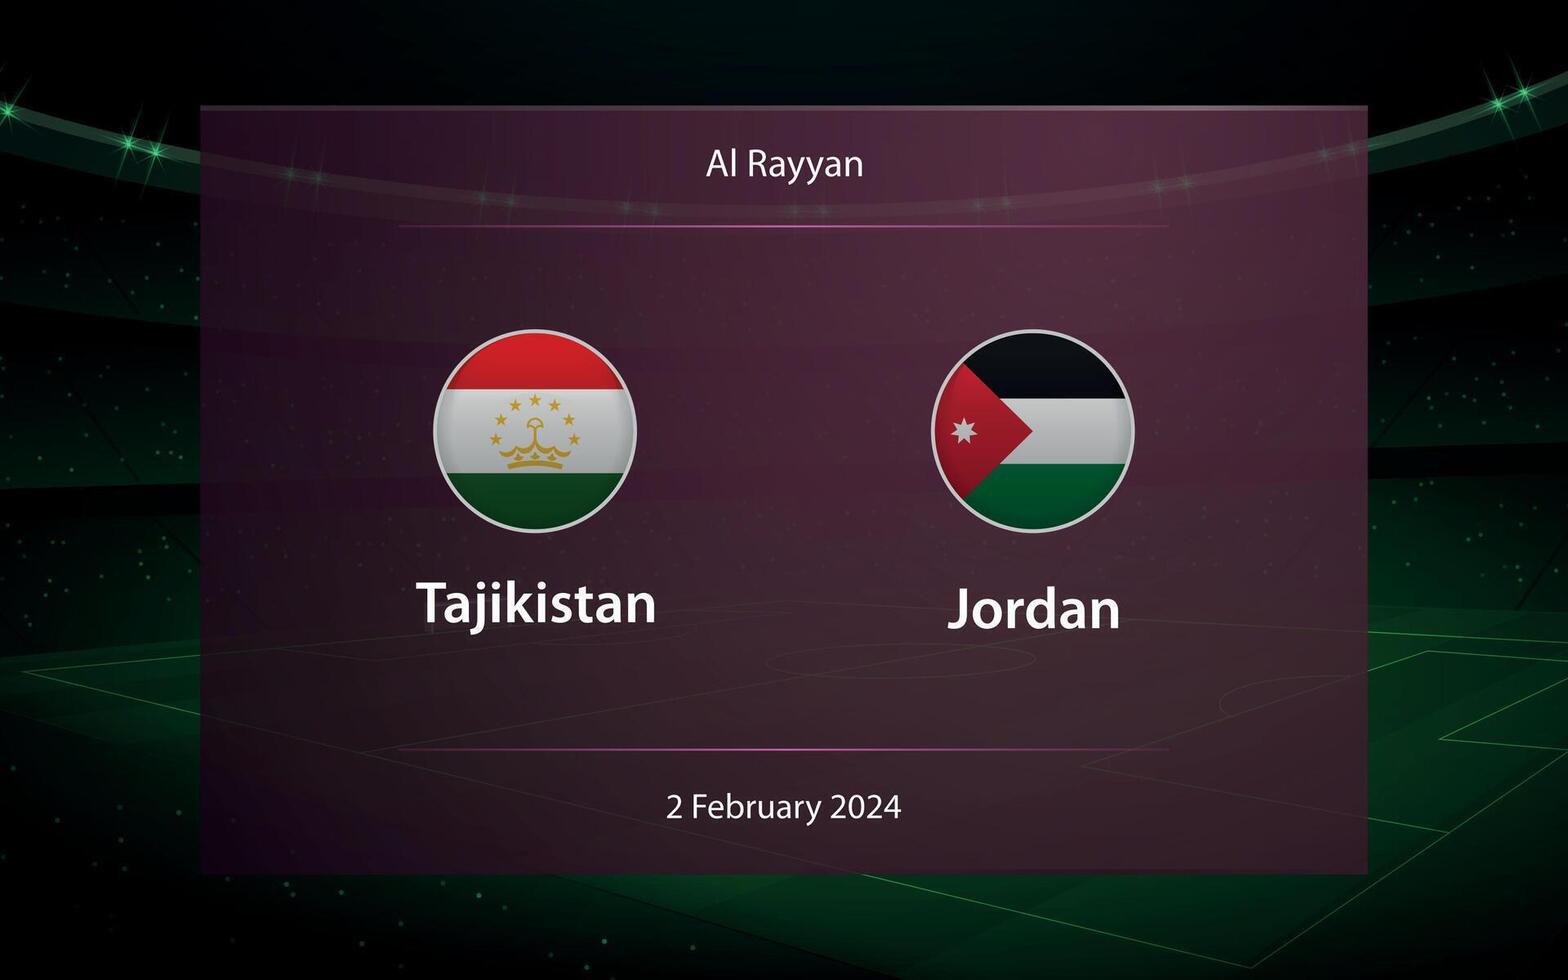 le tadjikistan contre Jordan. Assommer étape Asie 2023, football tableau de bord vecteur